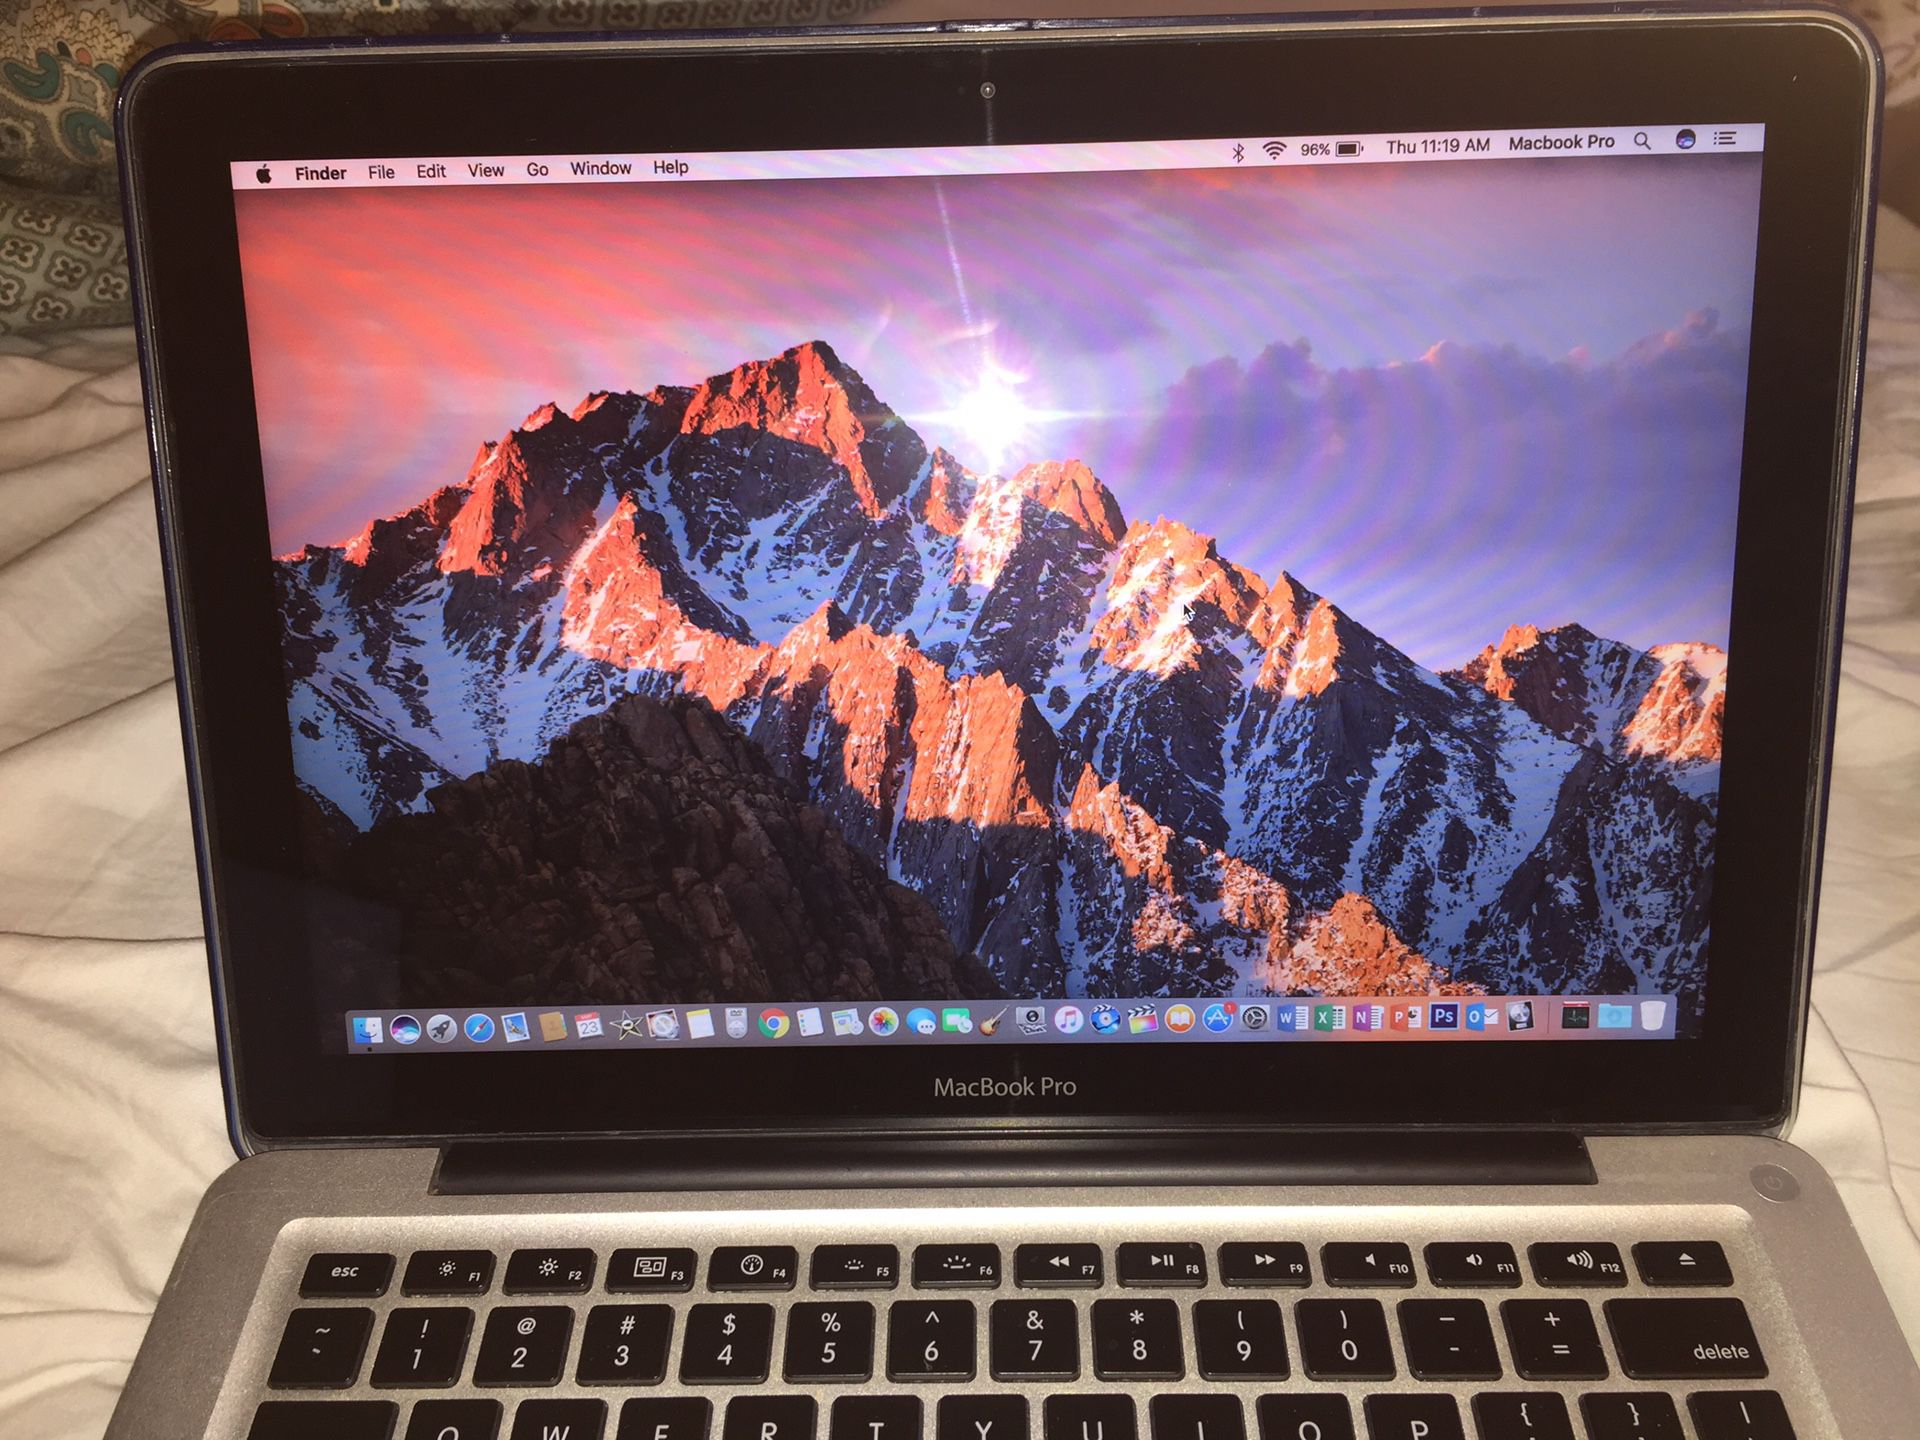 MacBook Intel C2D-2.4G, 8 Gb, 500Gb Solid StDrive, 13” Screen, Sierra, Final Cut. 2 Years Warranty.Bonus - Free Airpods TWS brand !